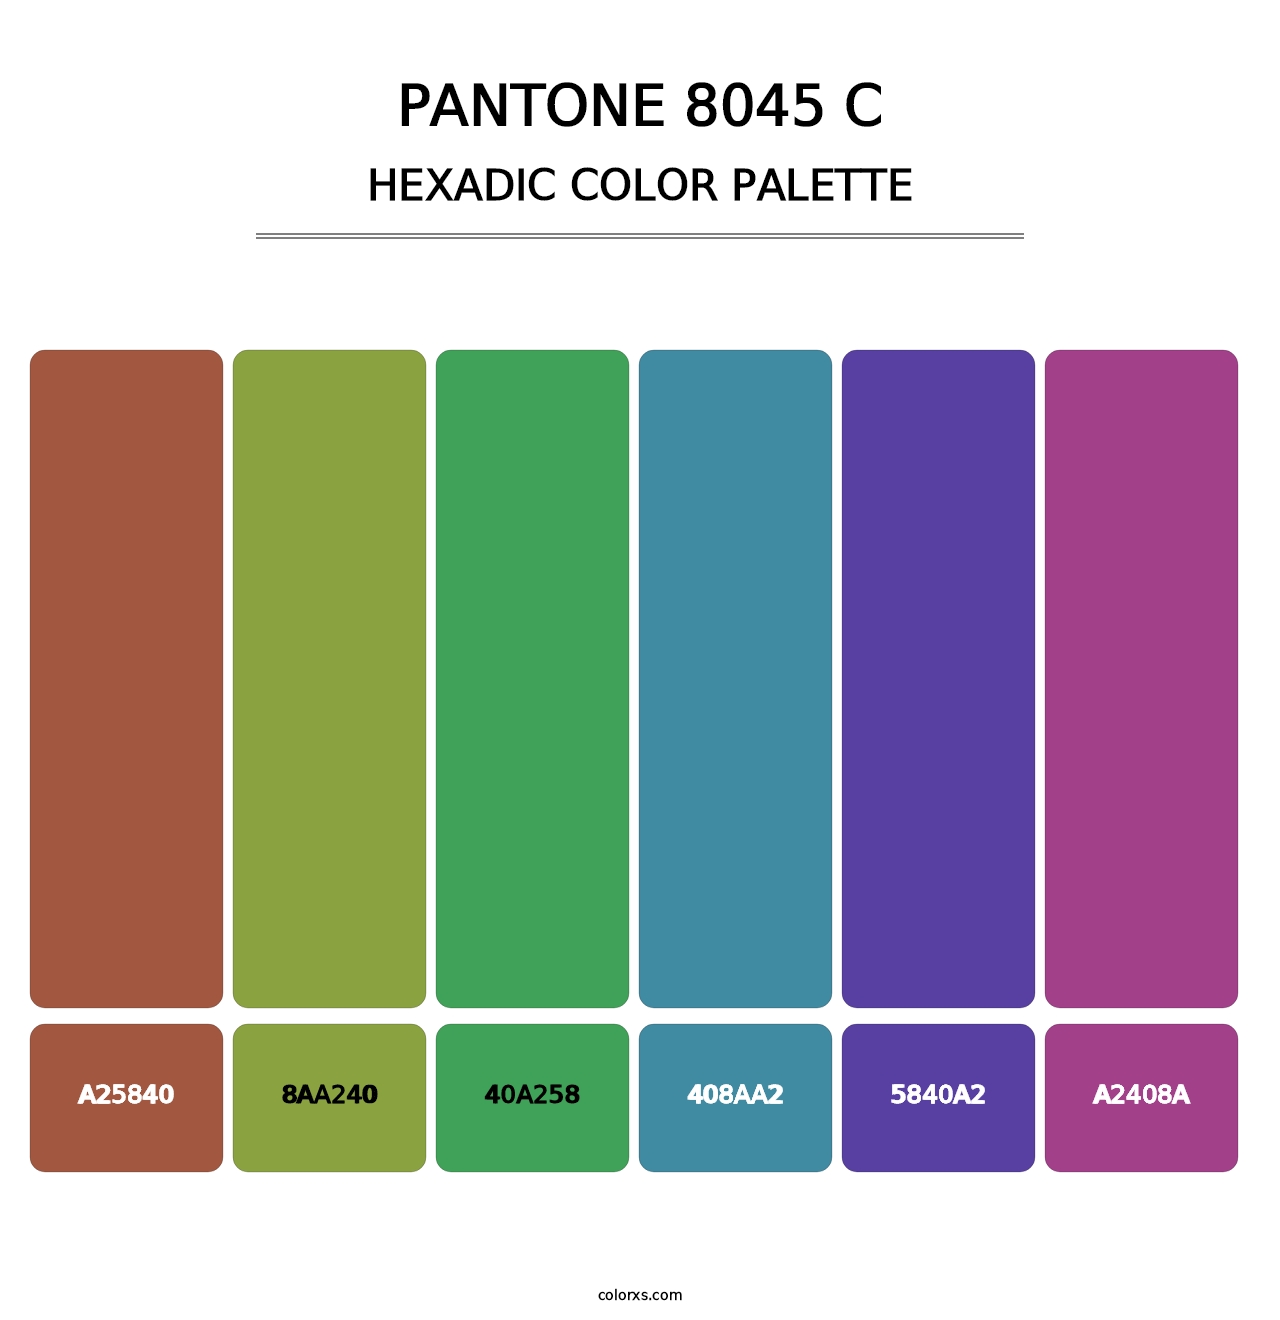 PANTONE 8045 C - Hexadic Color Palette